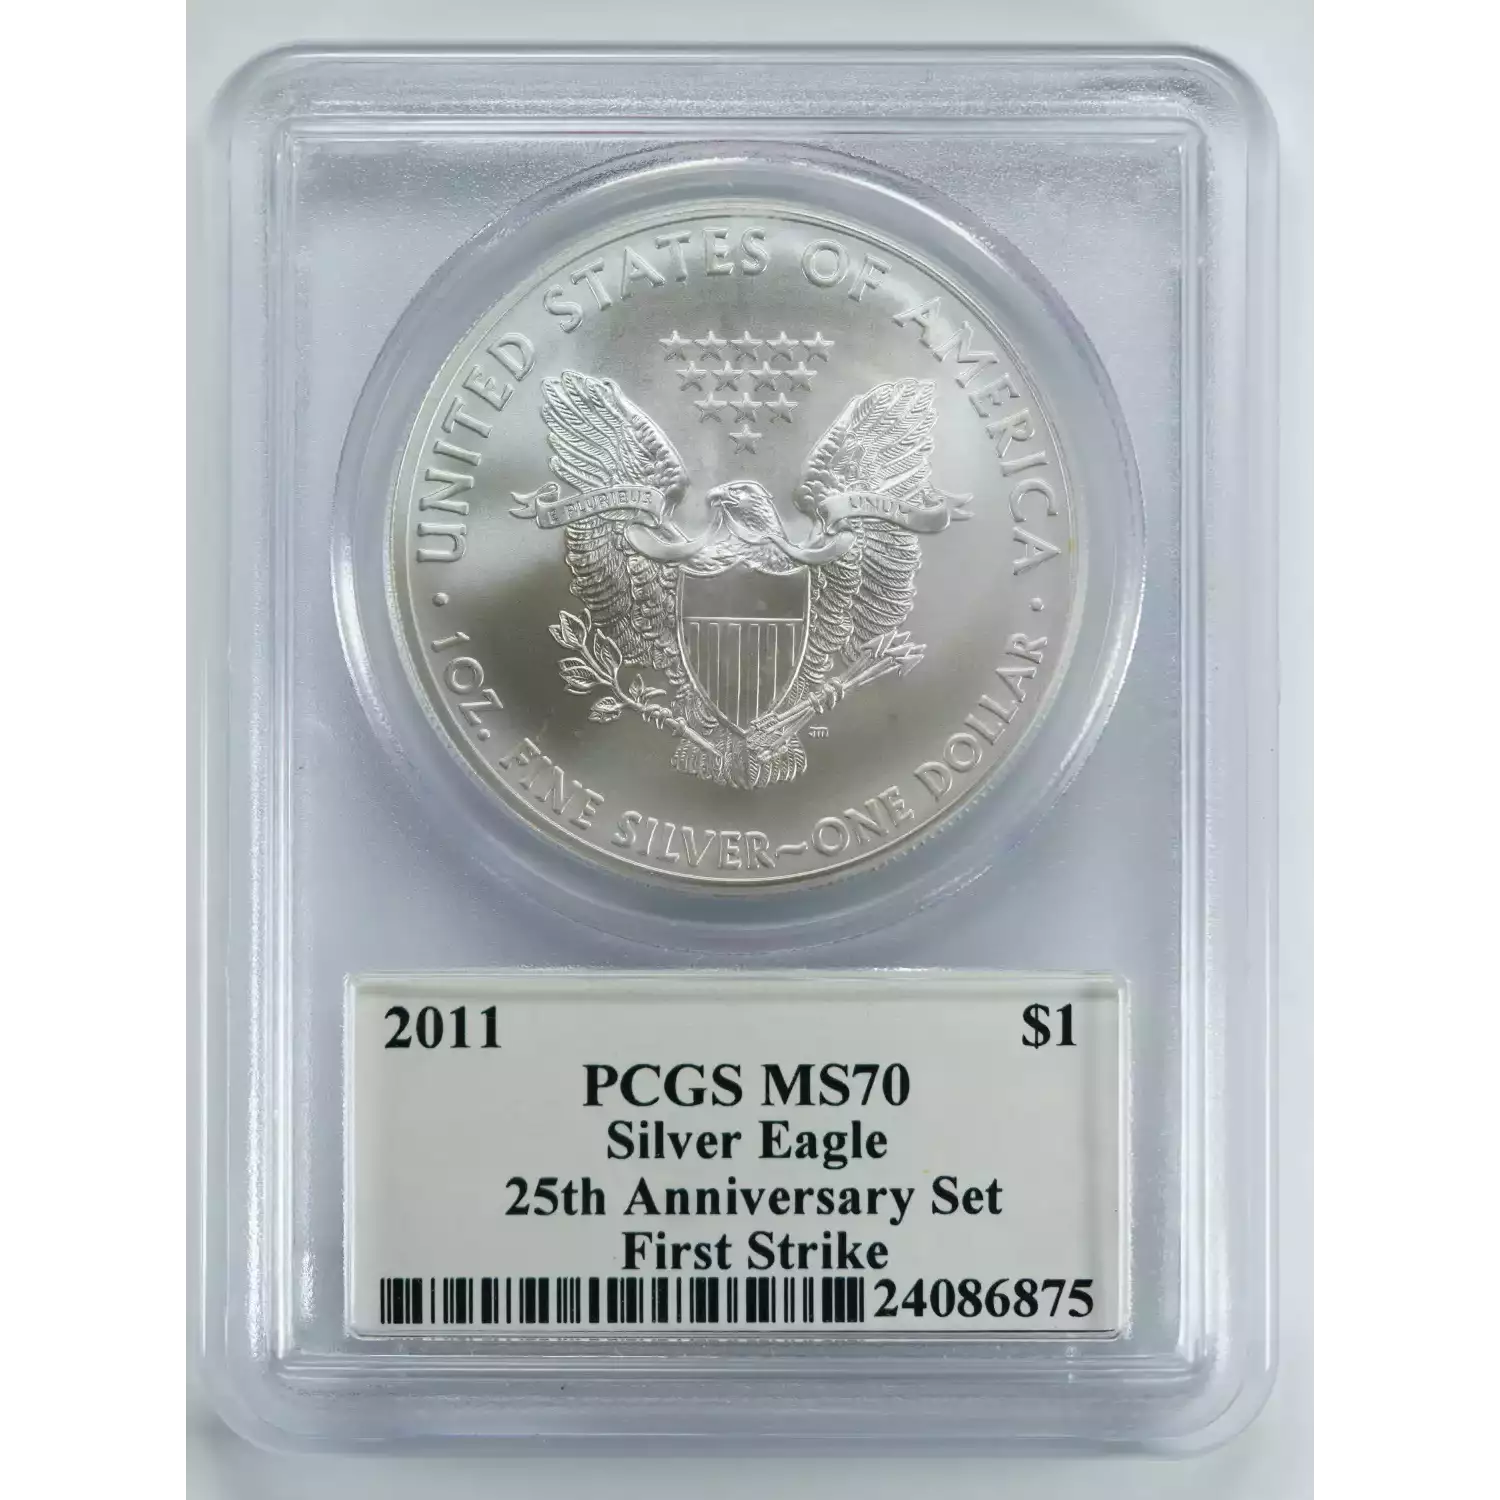 2011 $1 Silver Eagle 25th Anniversary Set First Strike